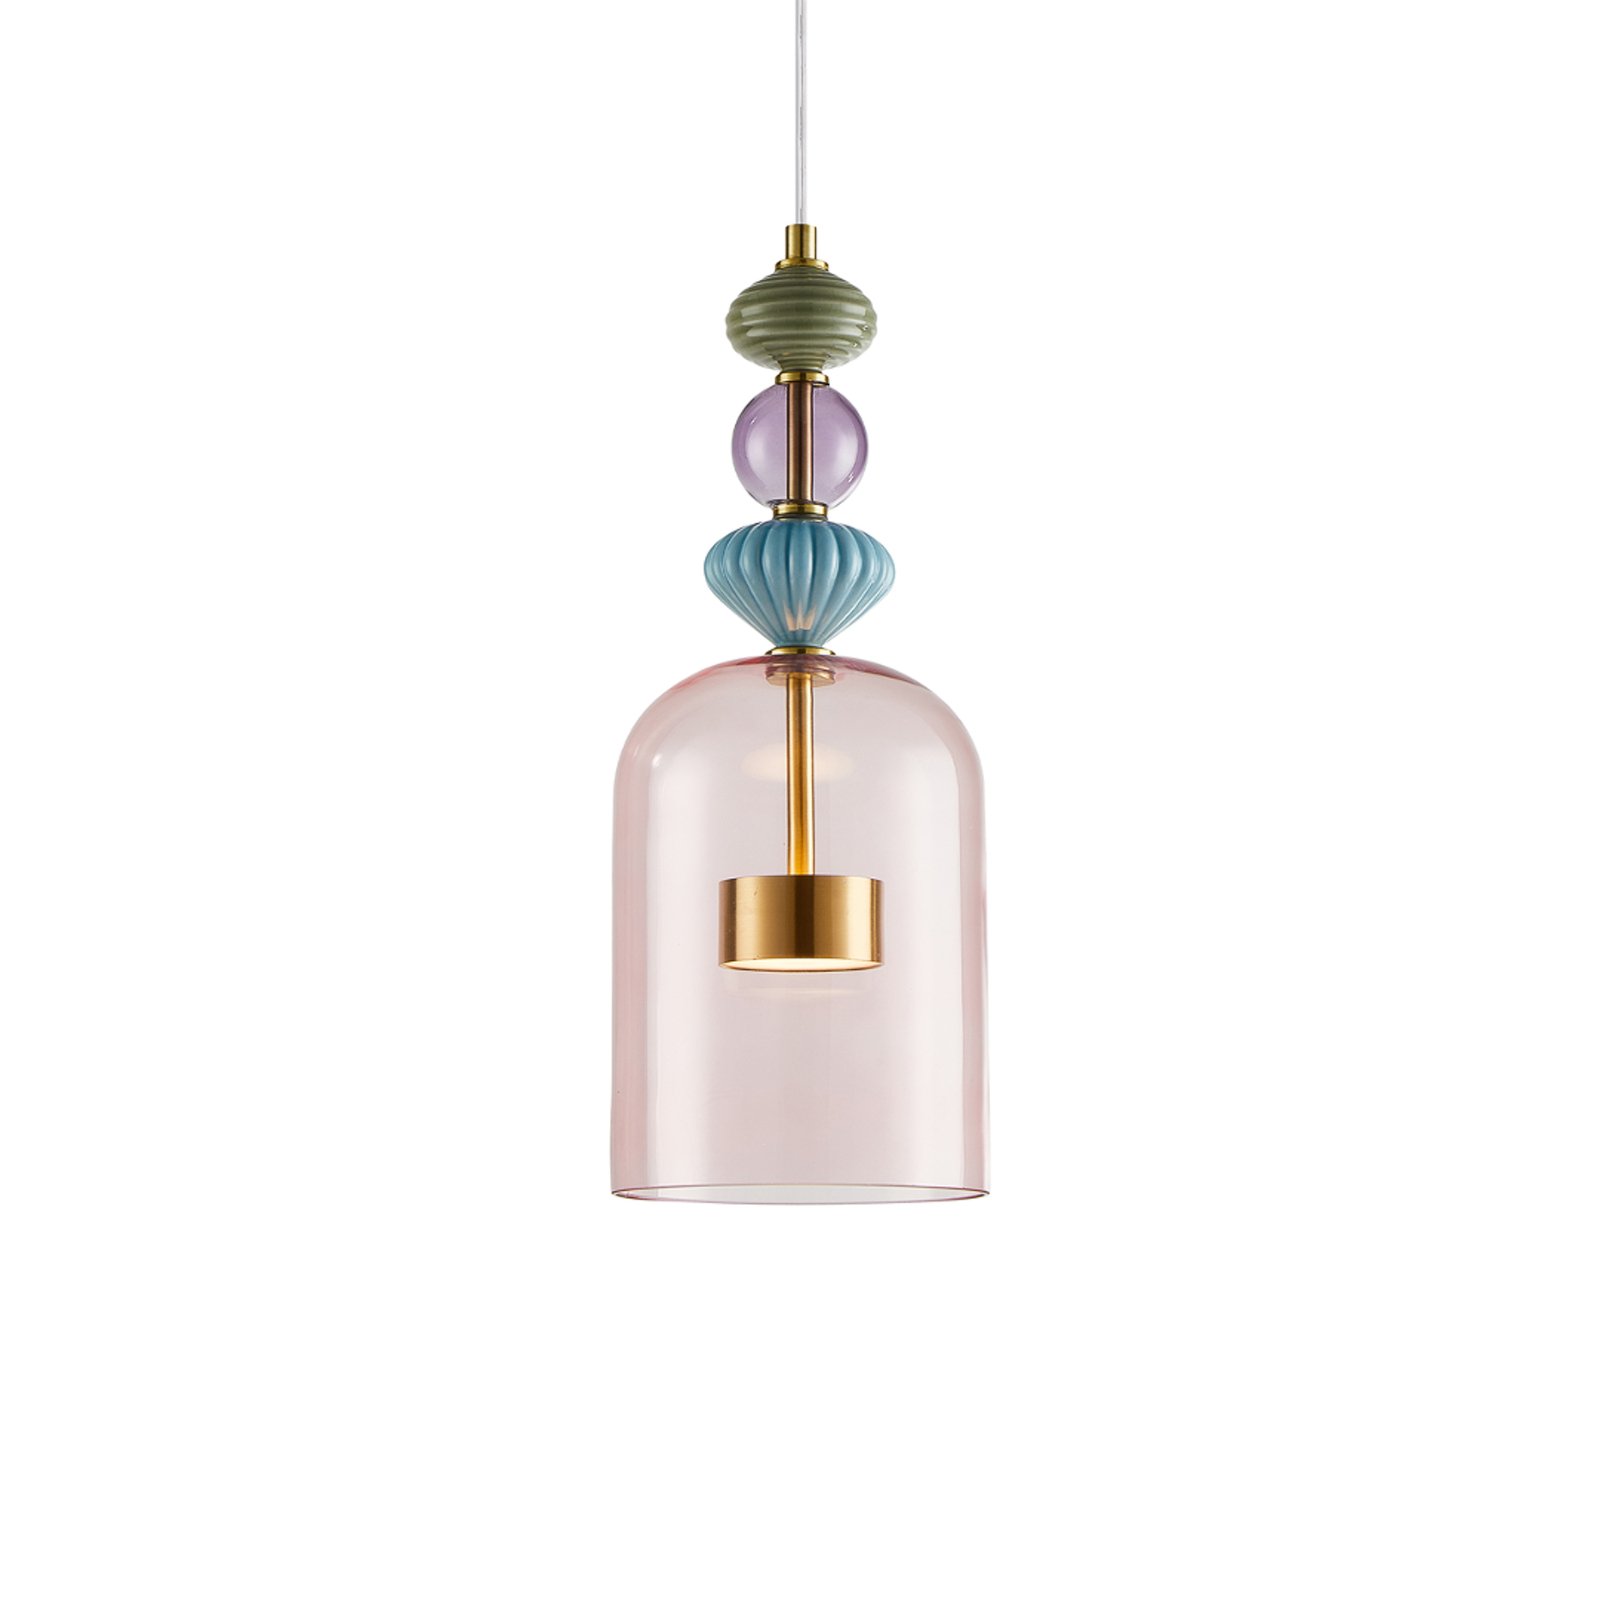 LED hanging light Arte, glass lampshade, pink, Ø 16 cm, 12 W